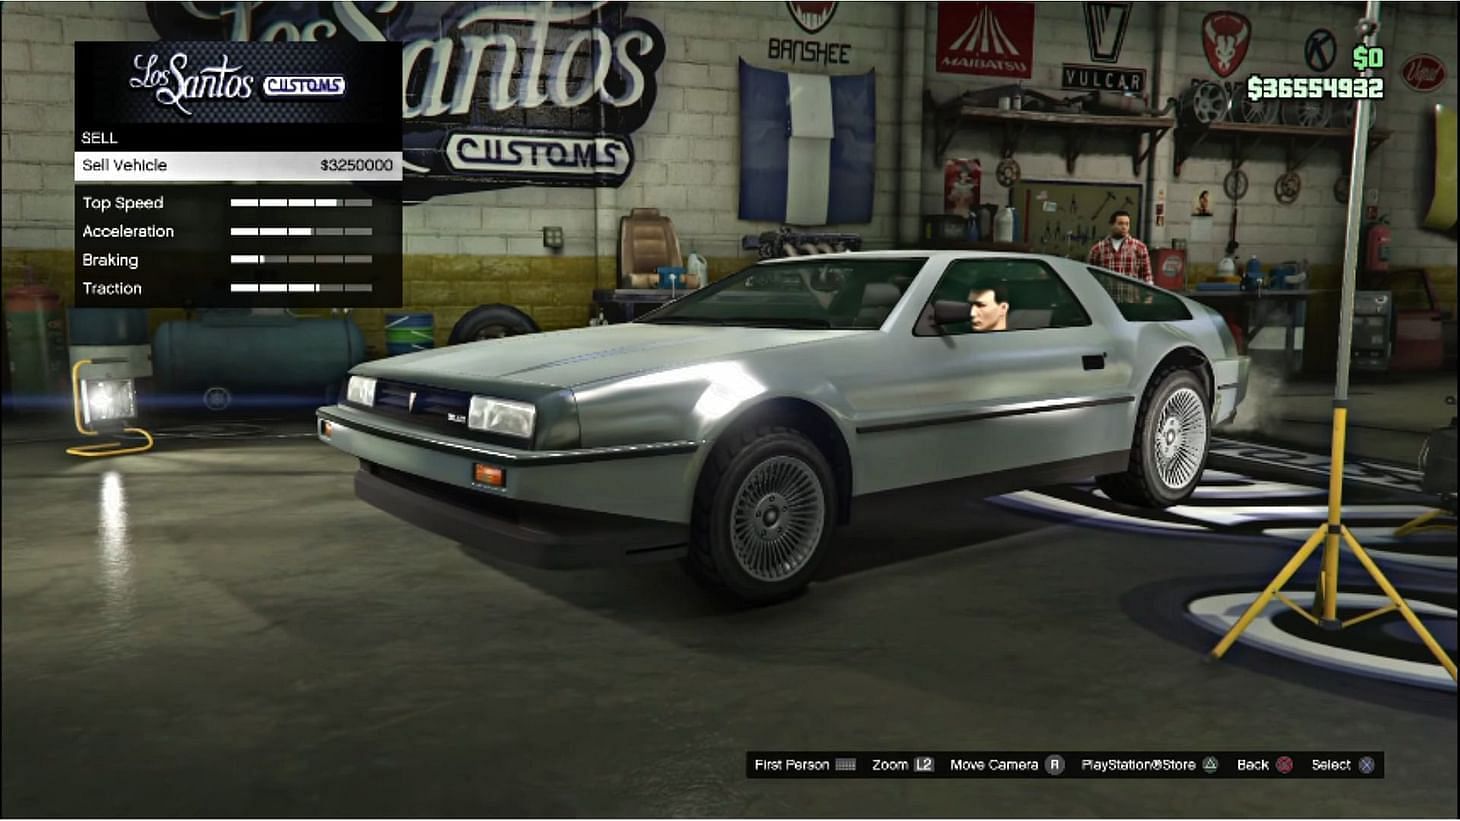 Selling the Deluxo in GTA 5 (Image via YouTube/Rams la pierre)